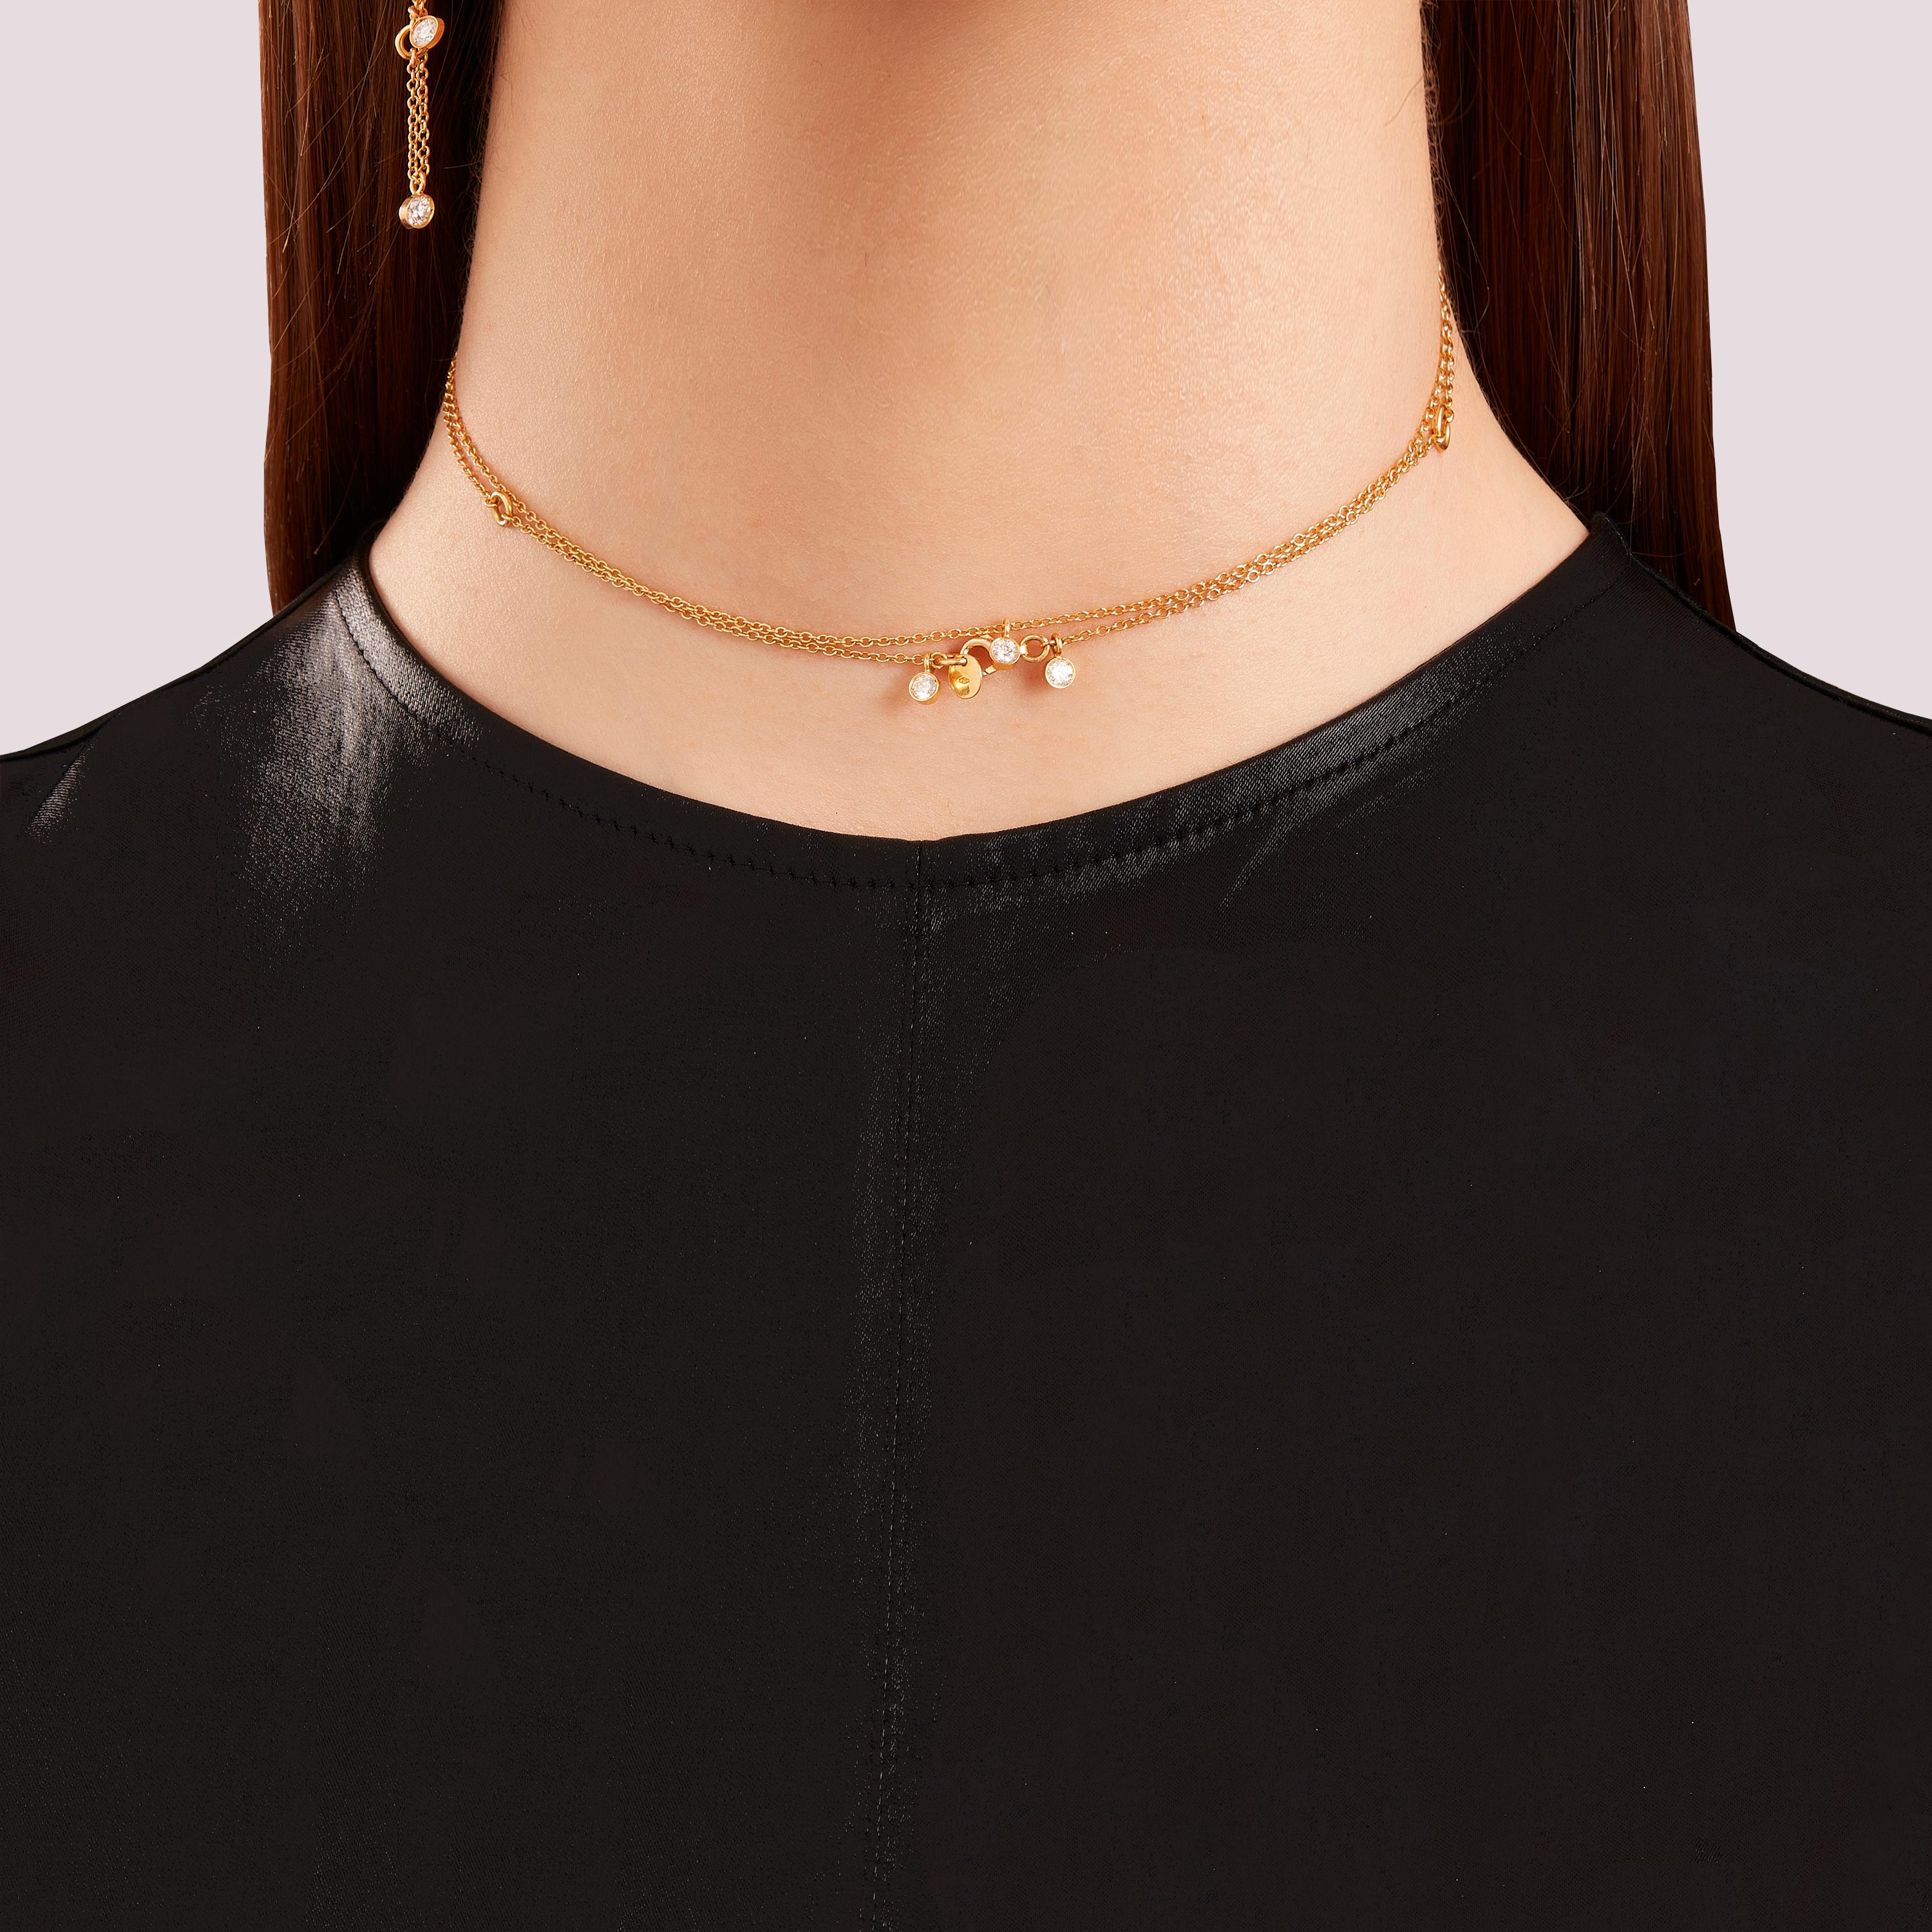 Nathalie Jean Contemporary 0.33 Carat Diamond Gold Pendant Chain Necklace For Sale 7